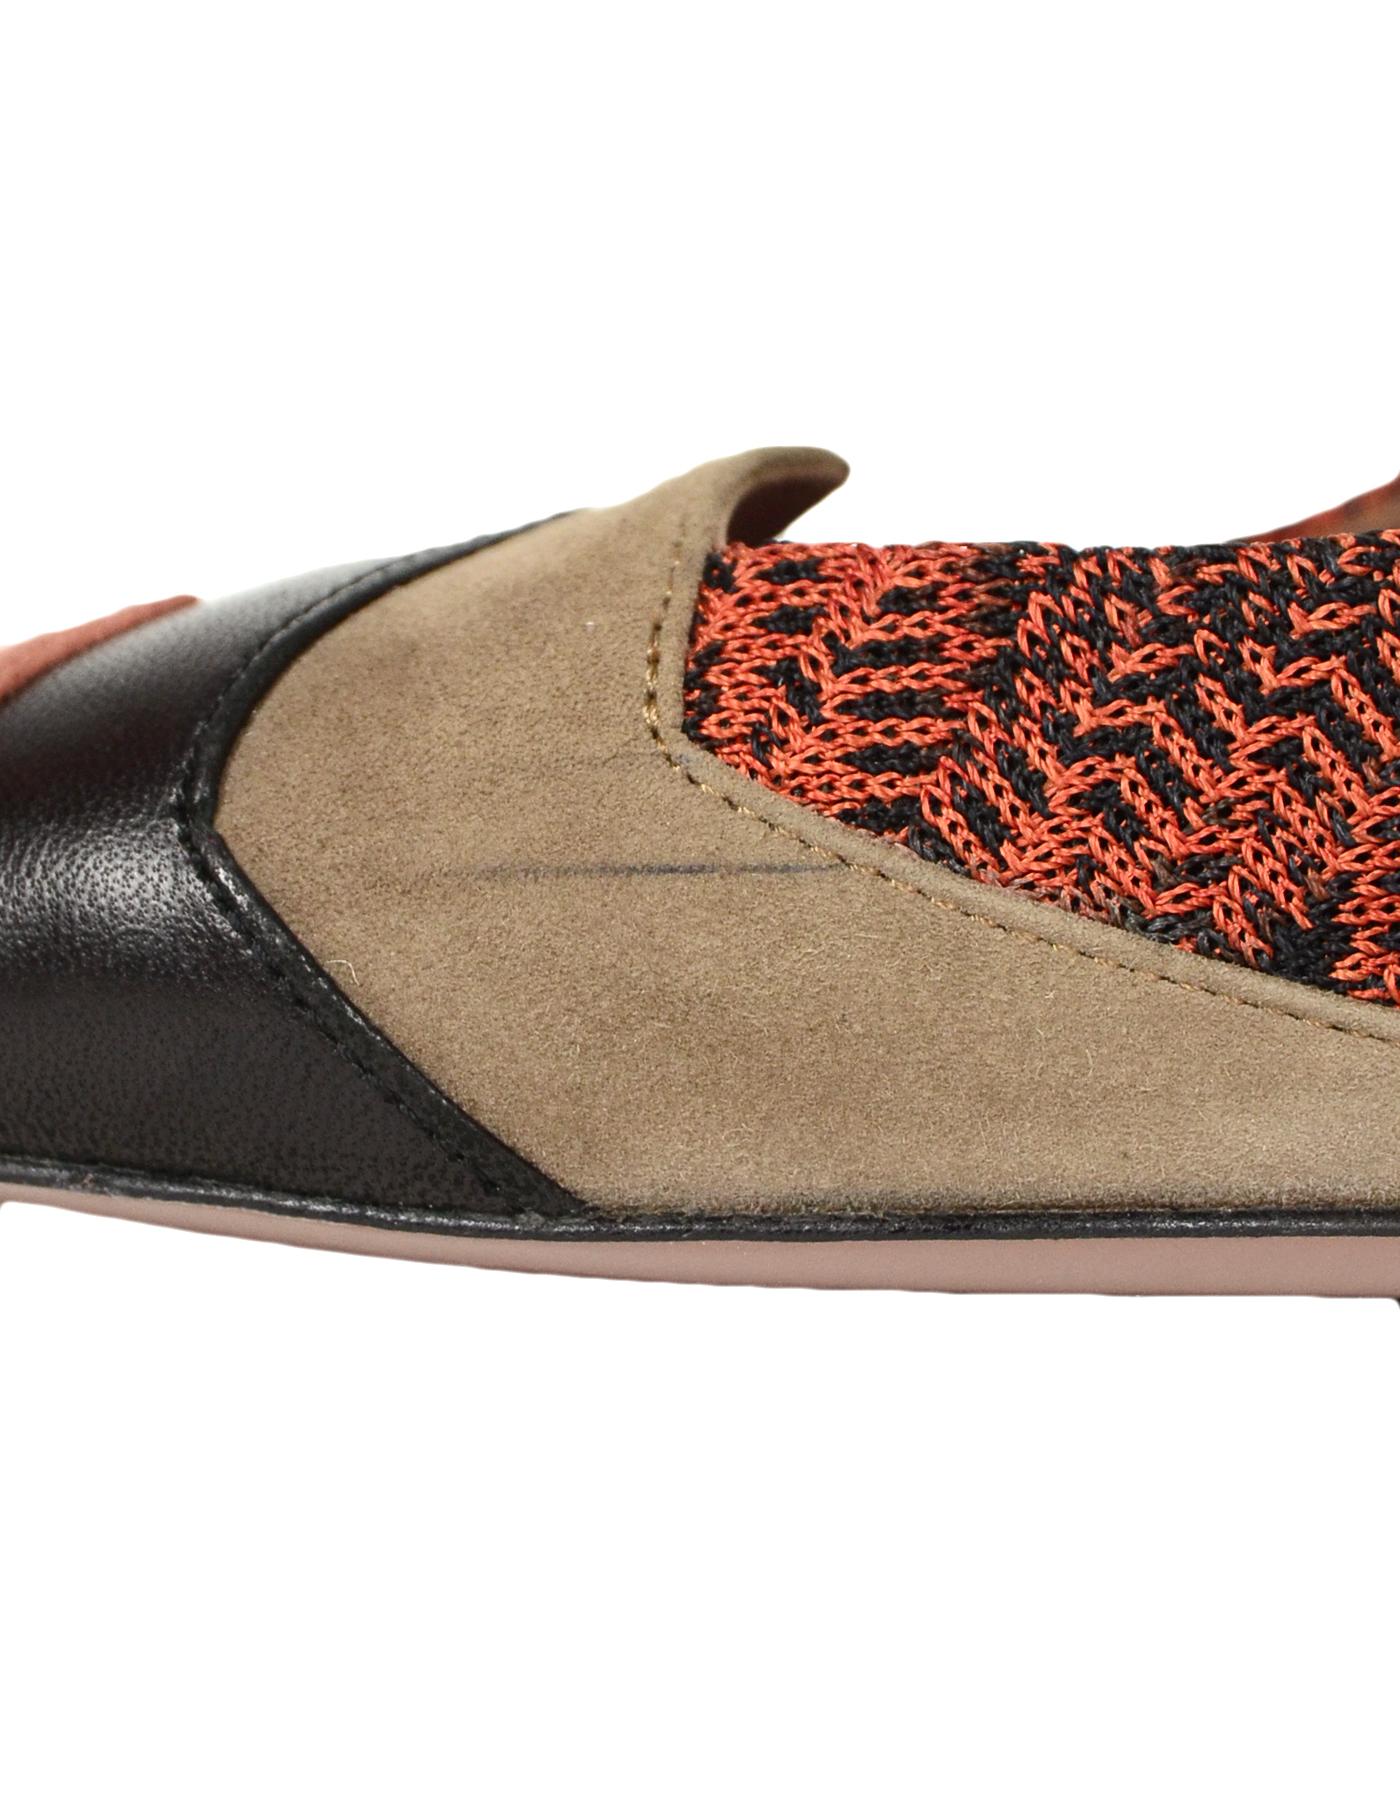 Missoni Orange/Black Knit/Leather Cap Toe Heels sz 39 1